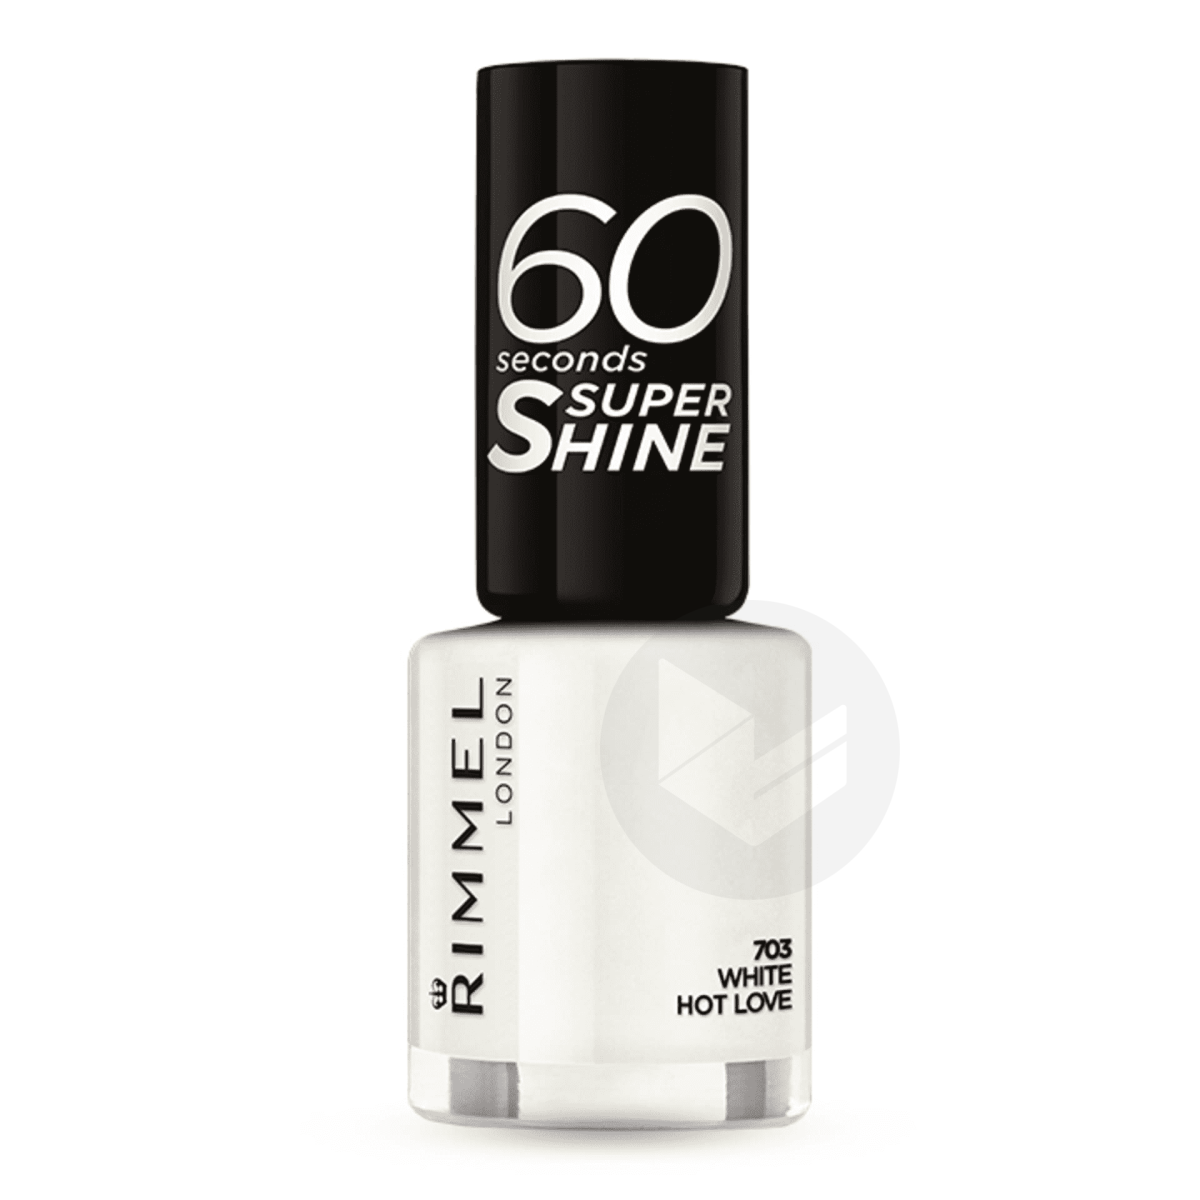 Vernis à ongles 60 Seconds Super Shine 703 White Hot Love 8ml